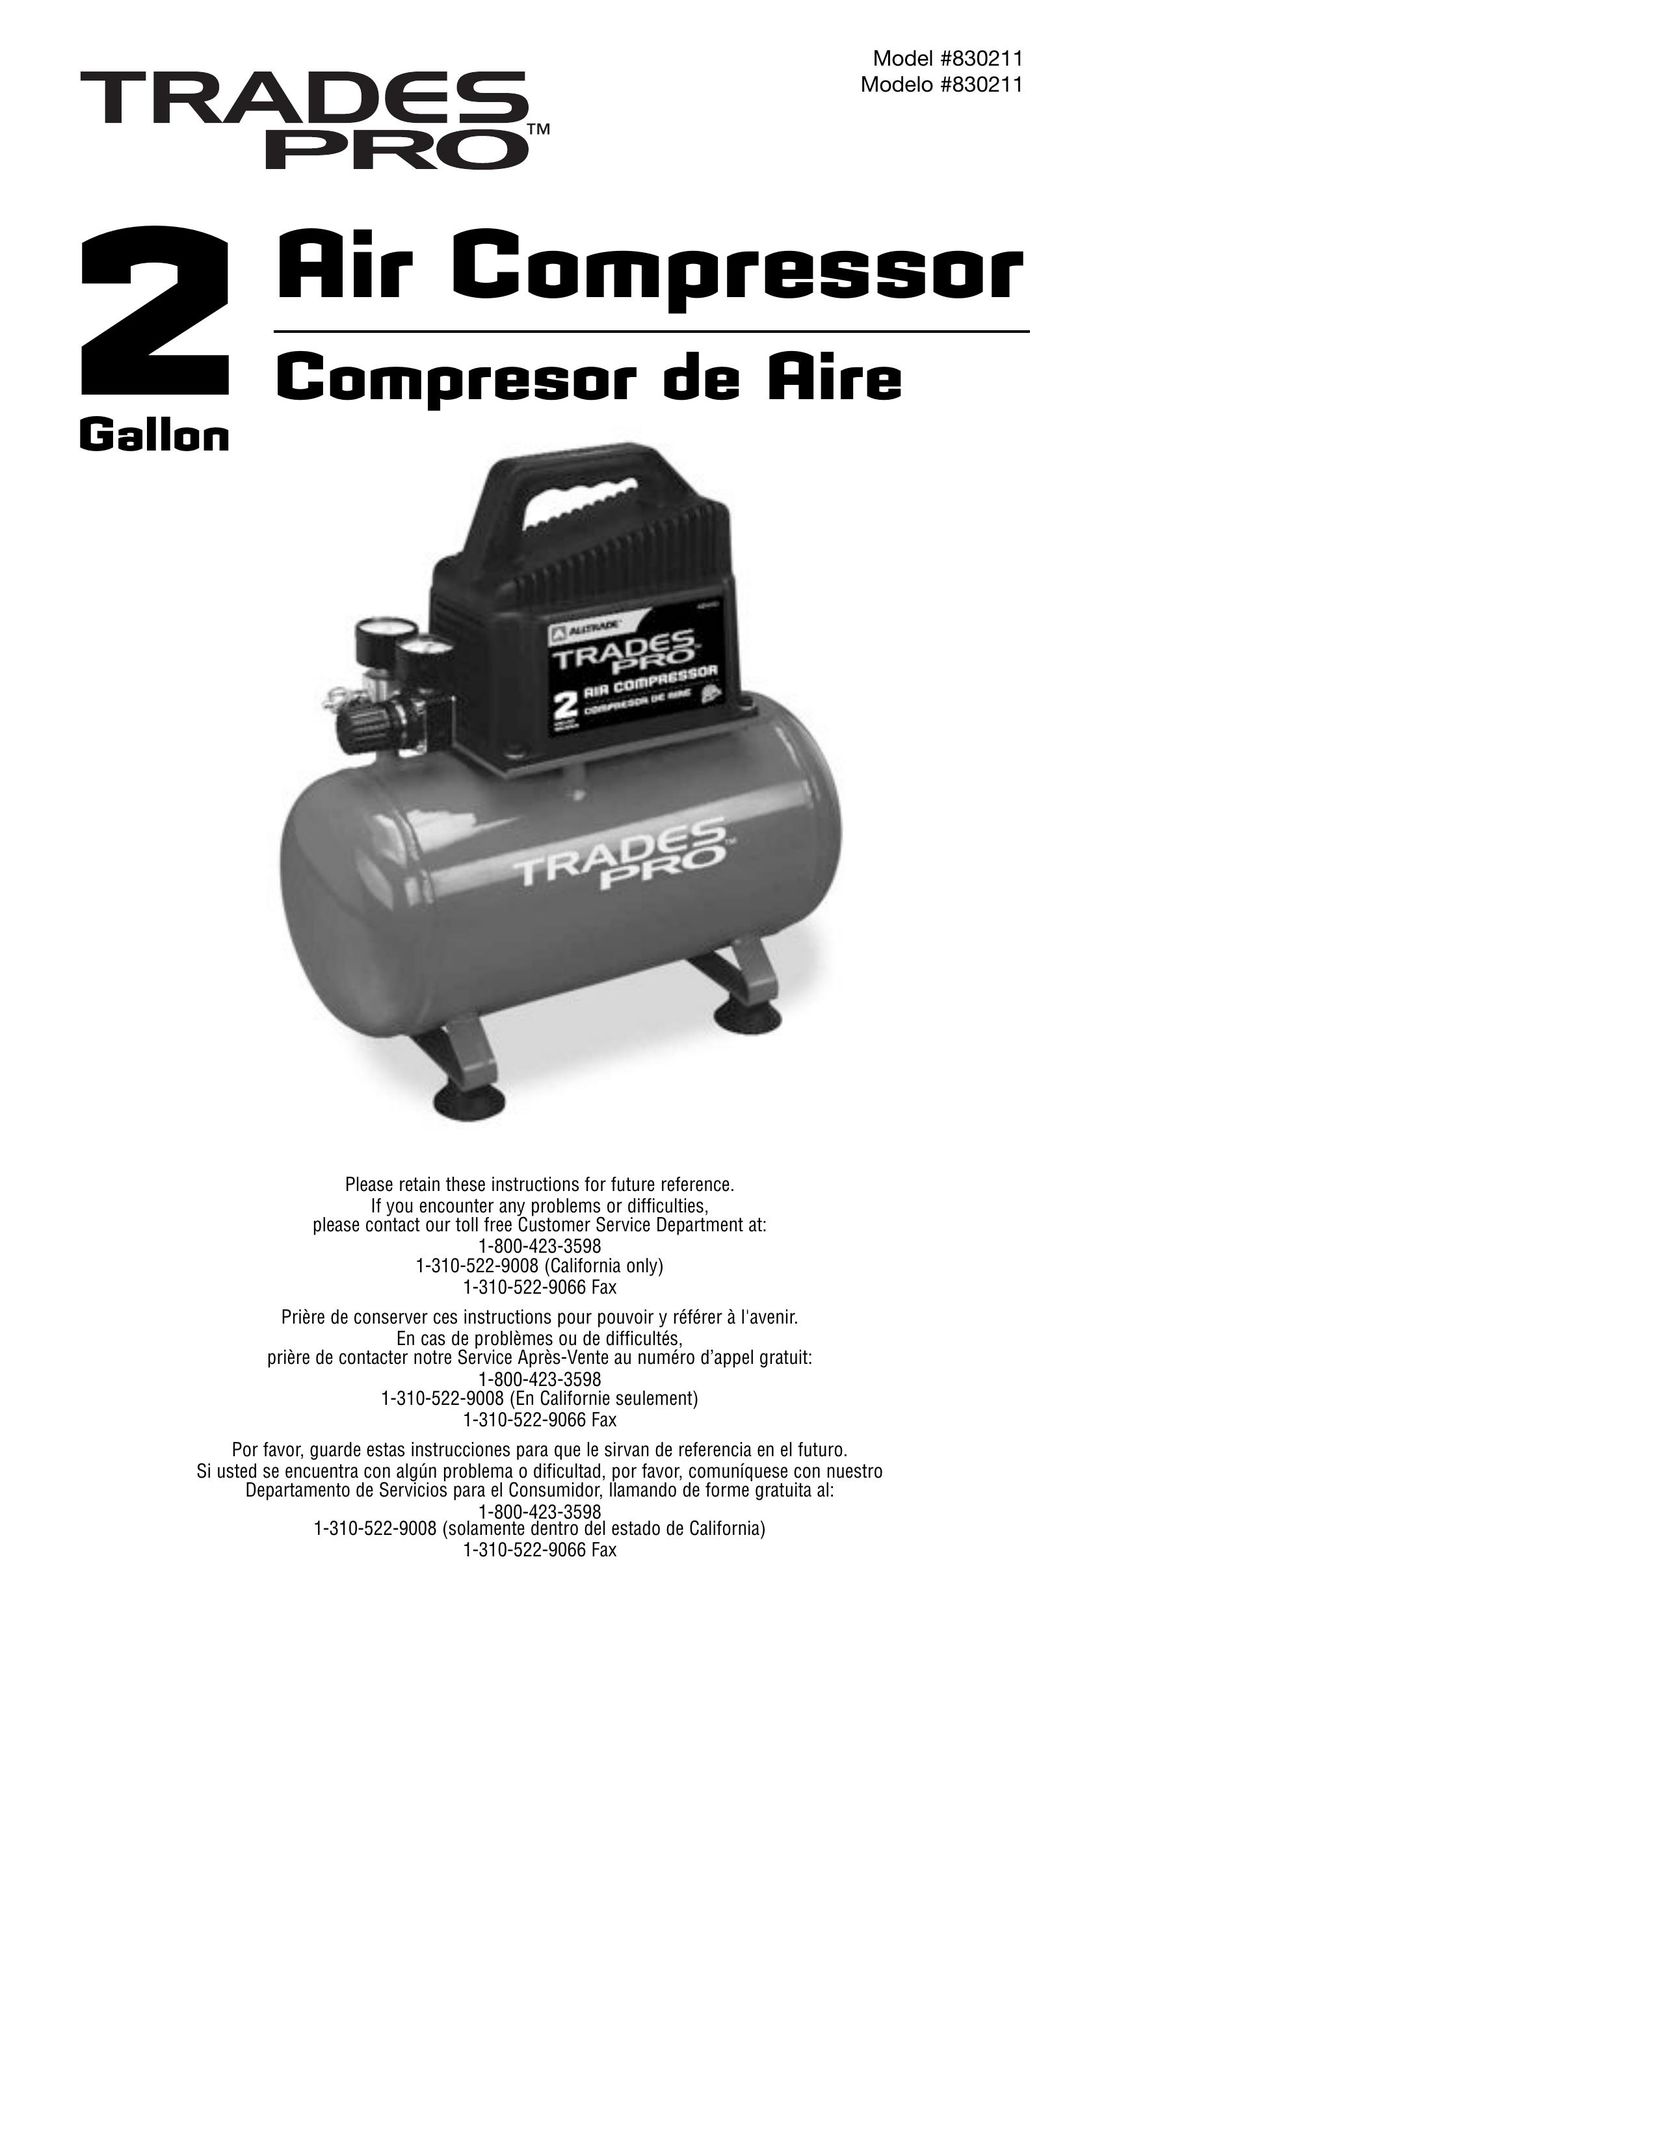 AllTrade 830211 Air Compressor User Manual